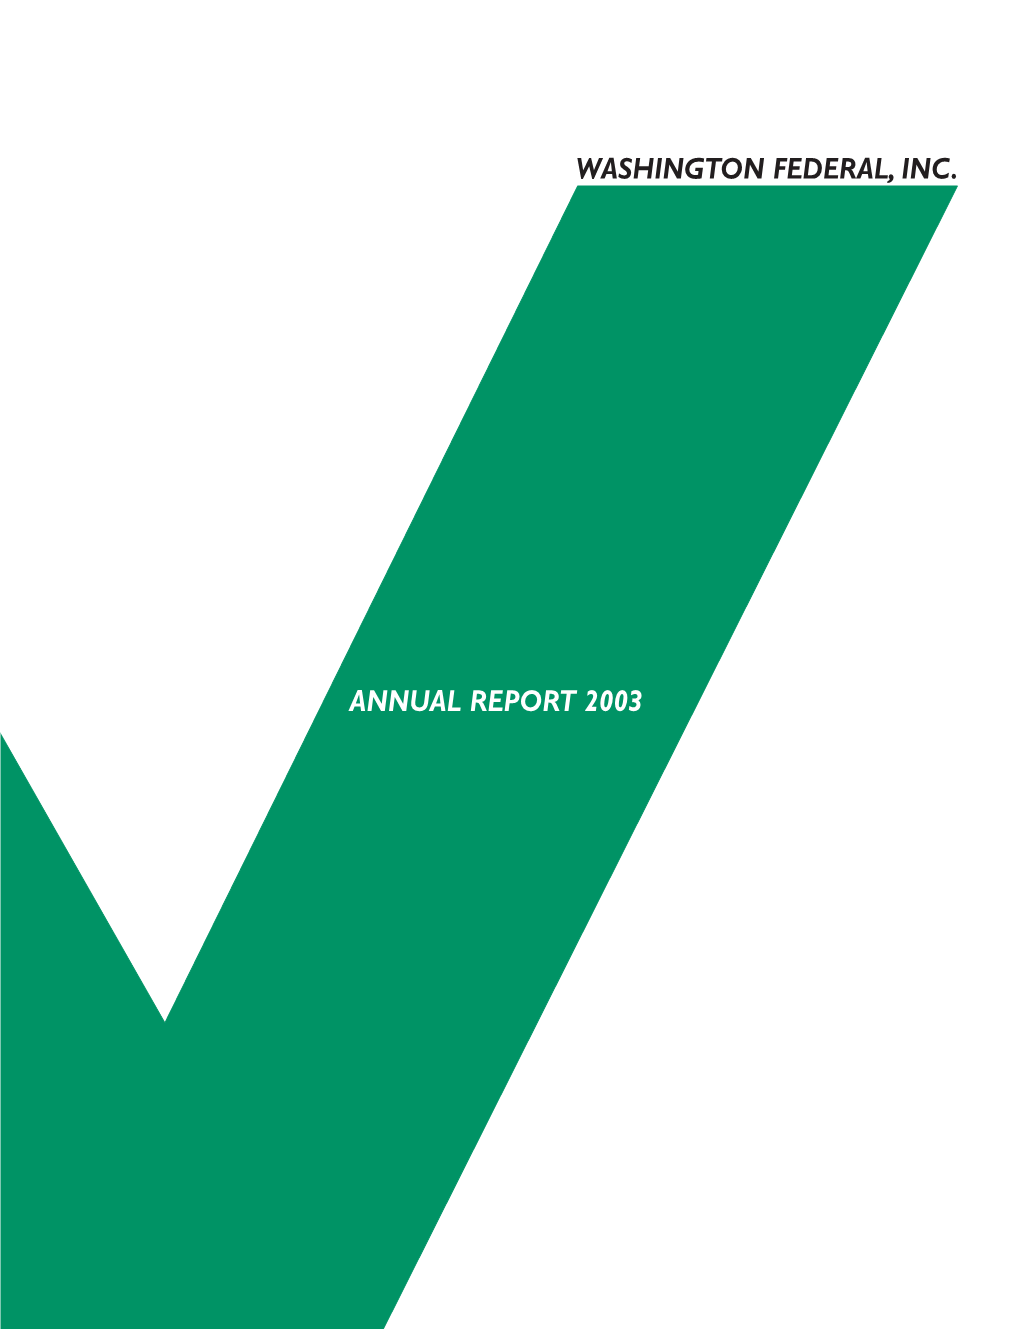 Washington Federal, Inc. Annual Report 2003